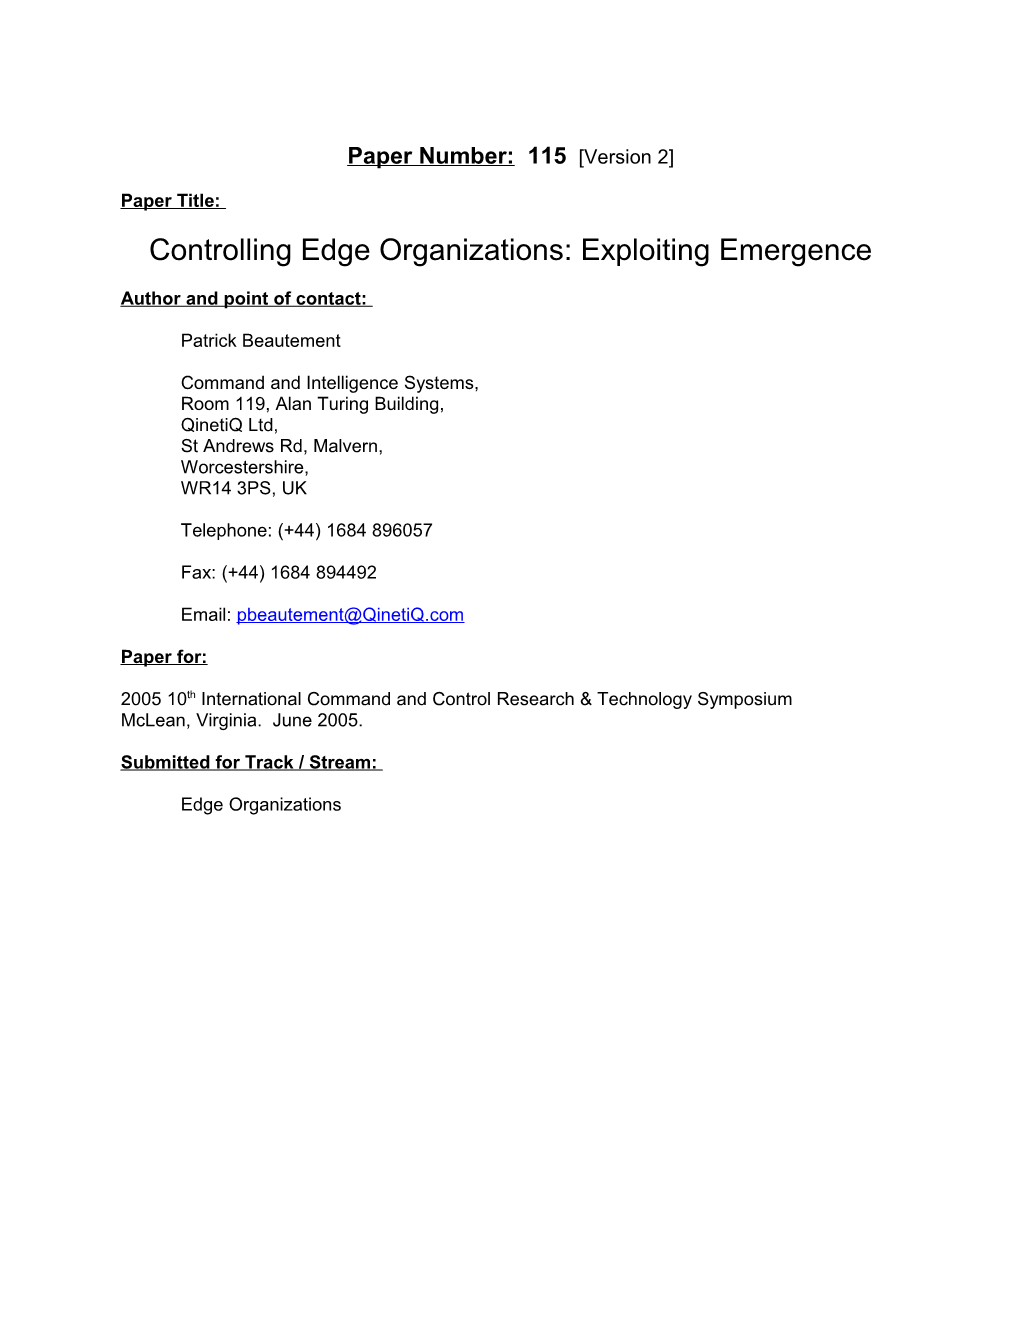 Controlling Edge Organizations: Exploiting Emergence